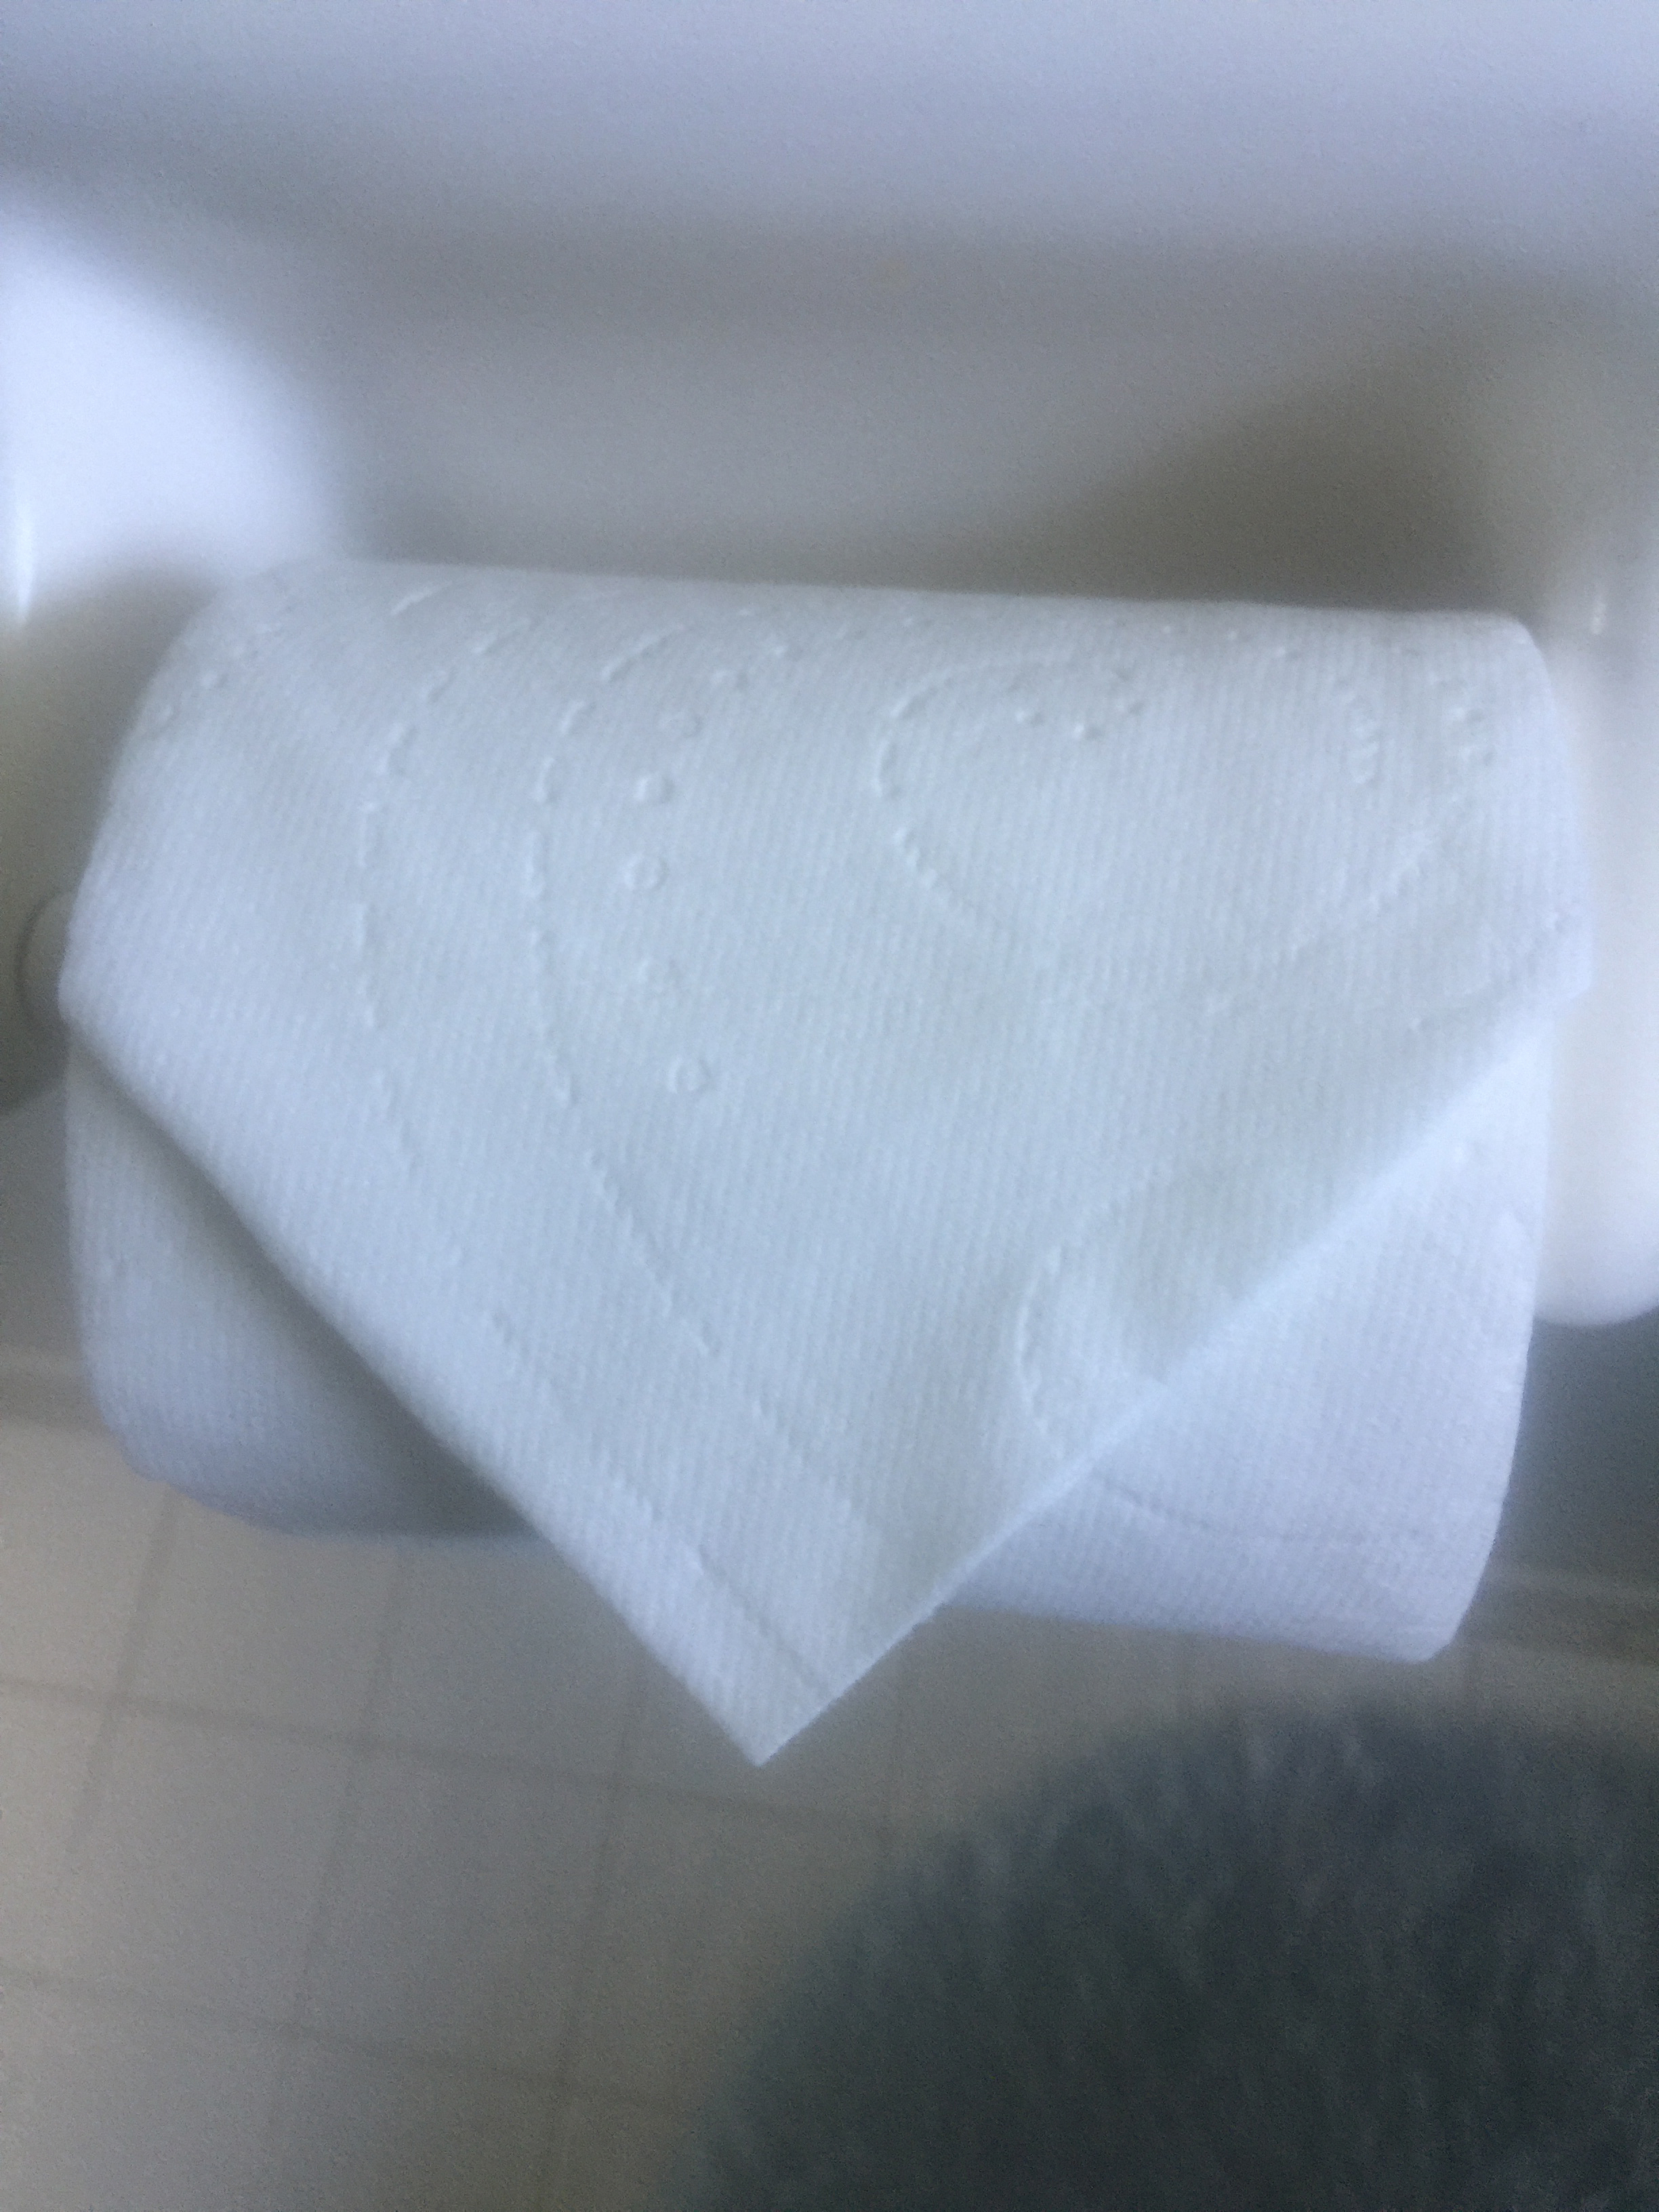 The hotel I'm at stamp their toilet paper rolls : r/mildlyinteresting